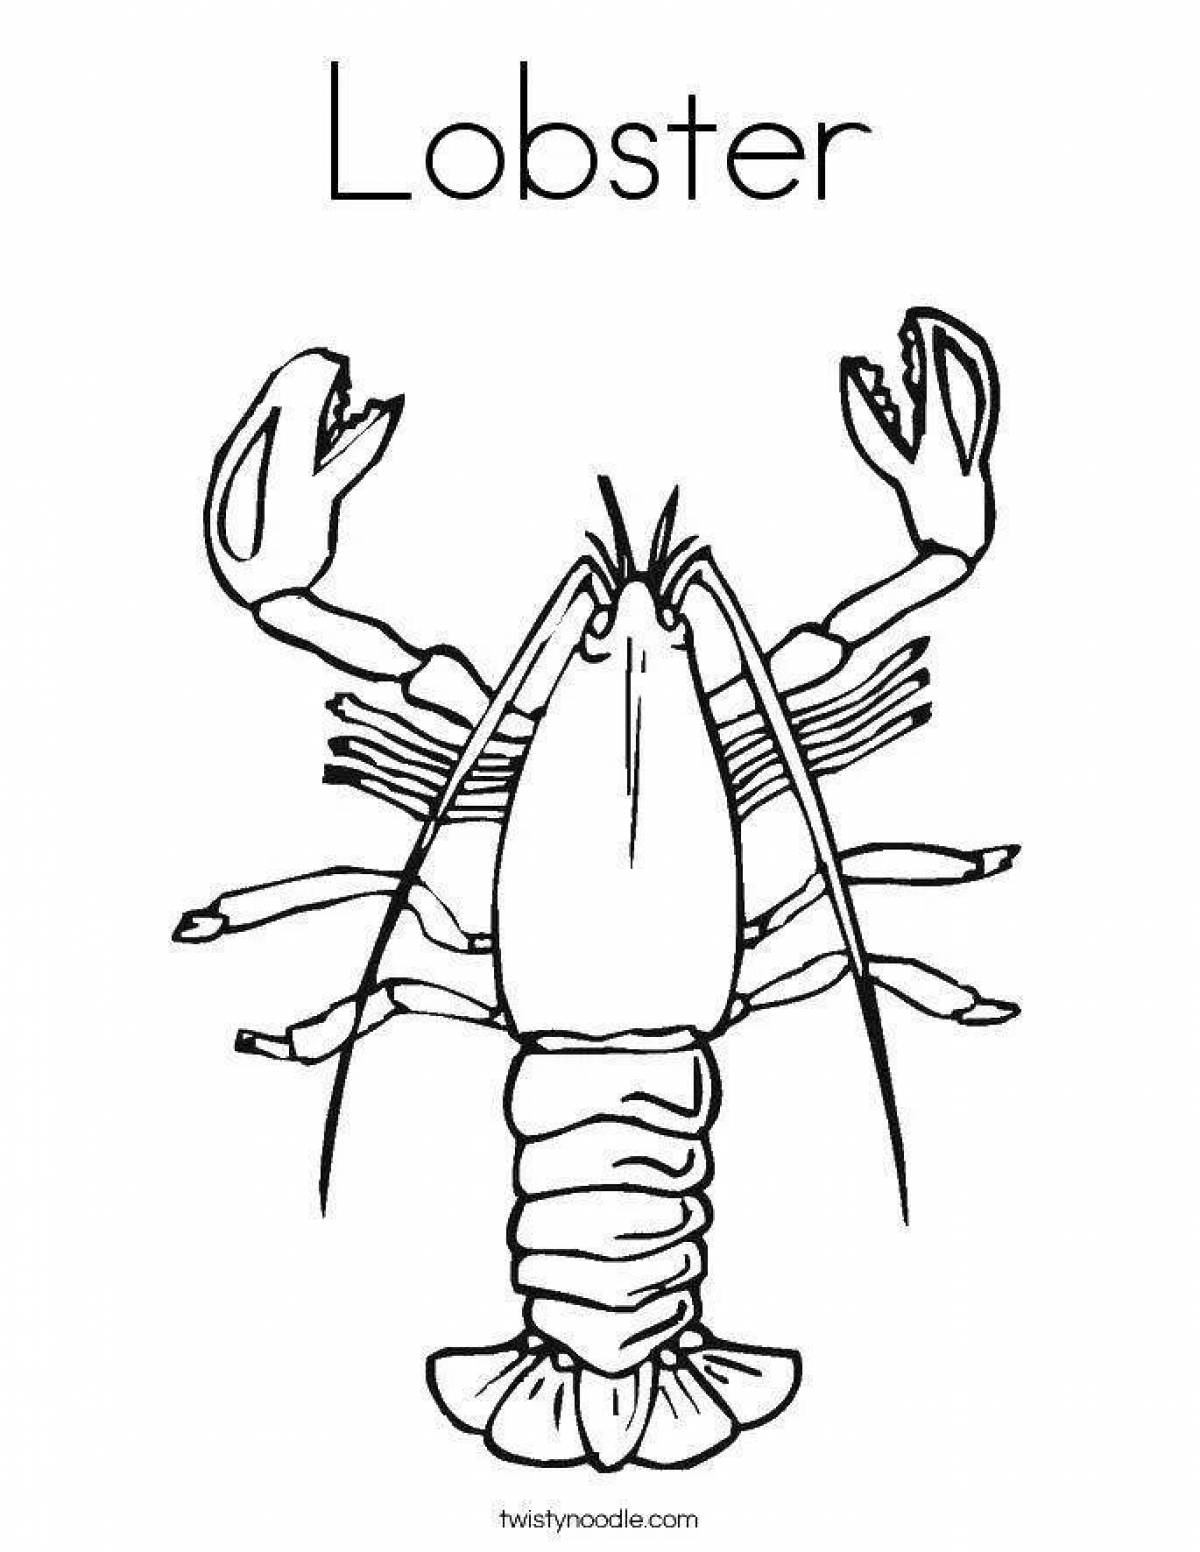 Coloring big lobster